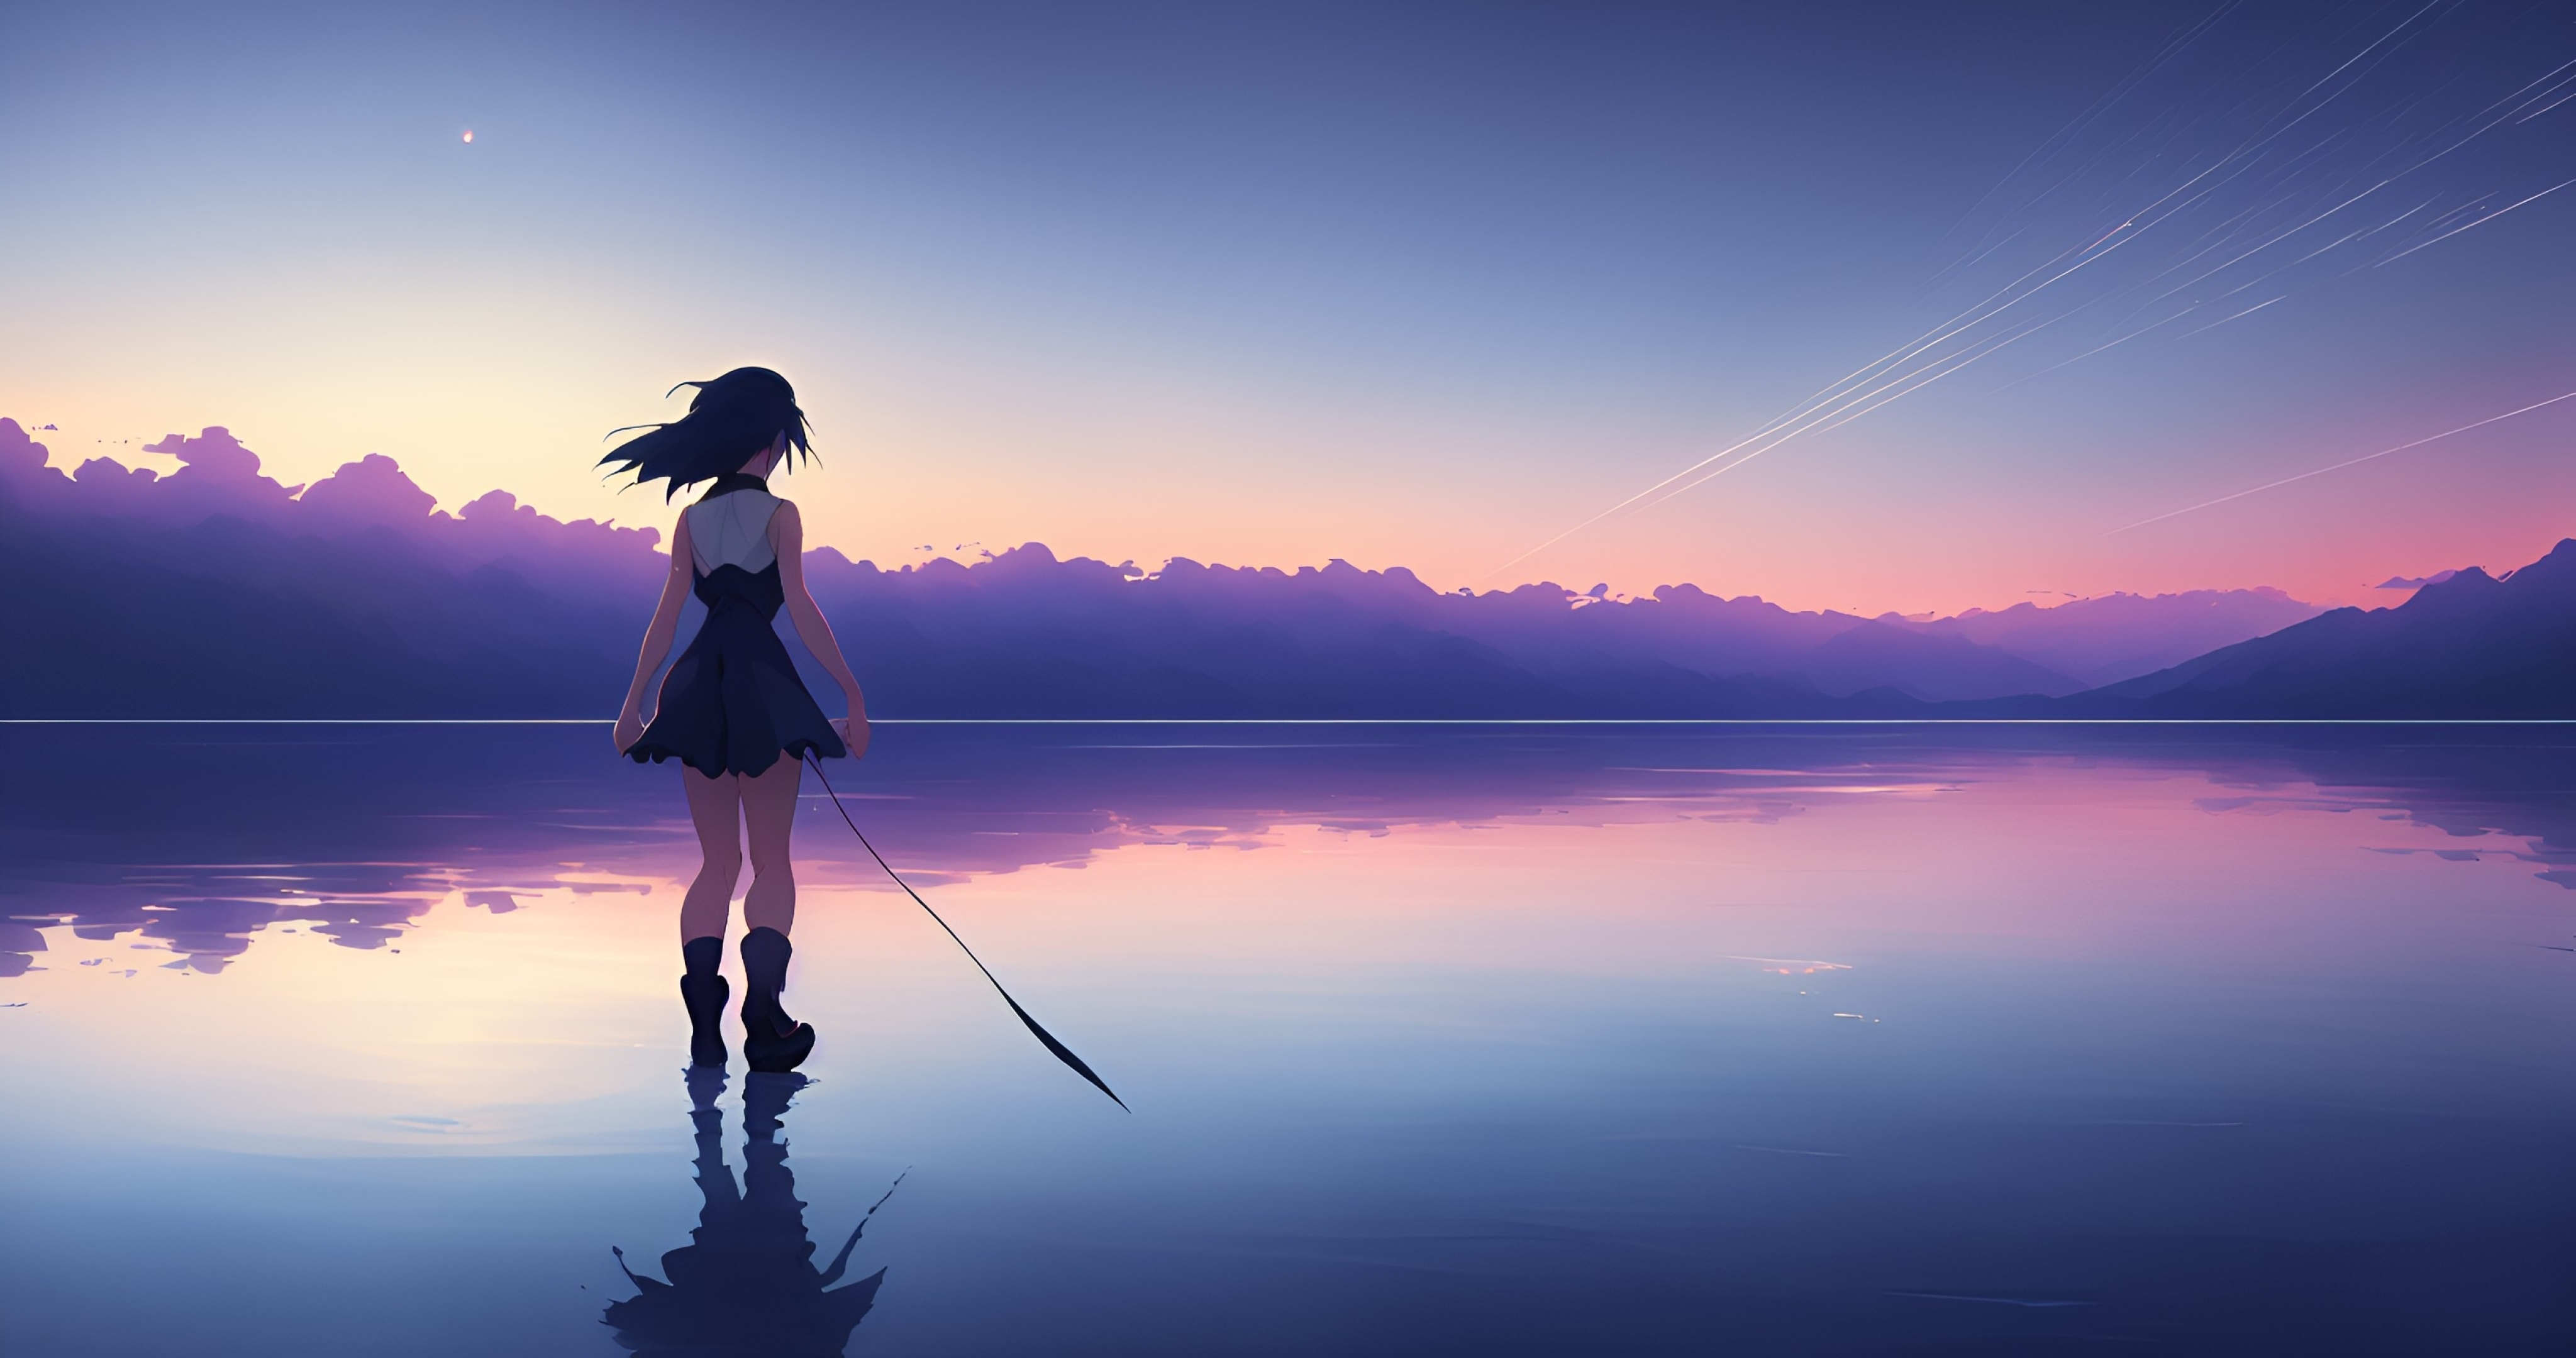 4096x2160 Anime Girl In Gradient Evening Ocean 4096x2160 Resolution Wallpaper Hd Anime 4k 0481